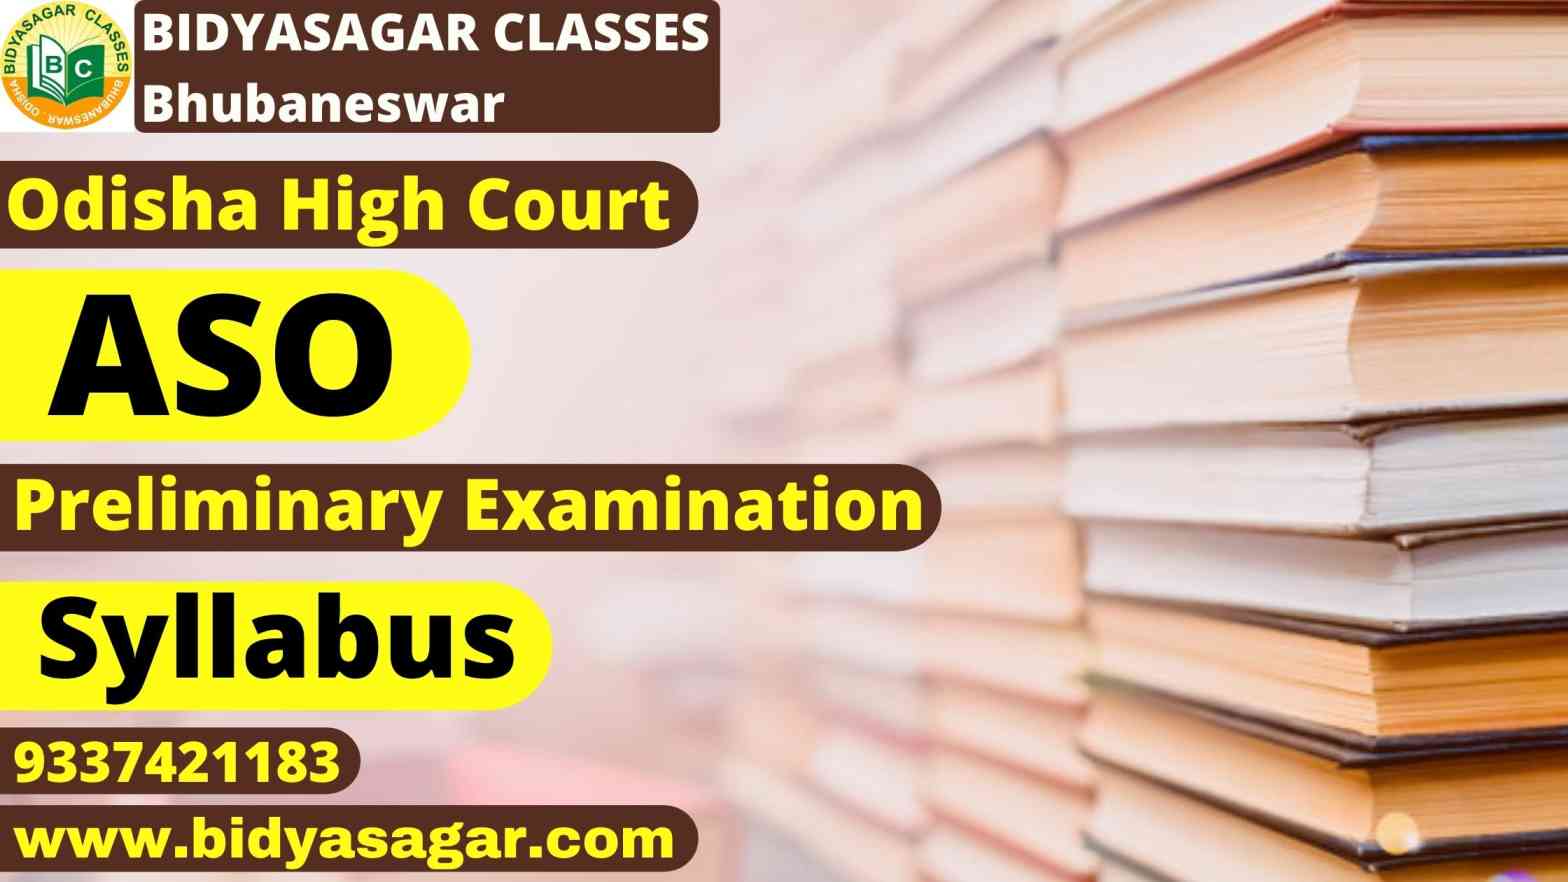 Odisha High Court ASO Preliminary Examination Syllabus